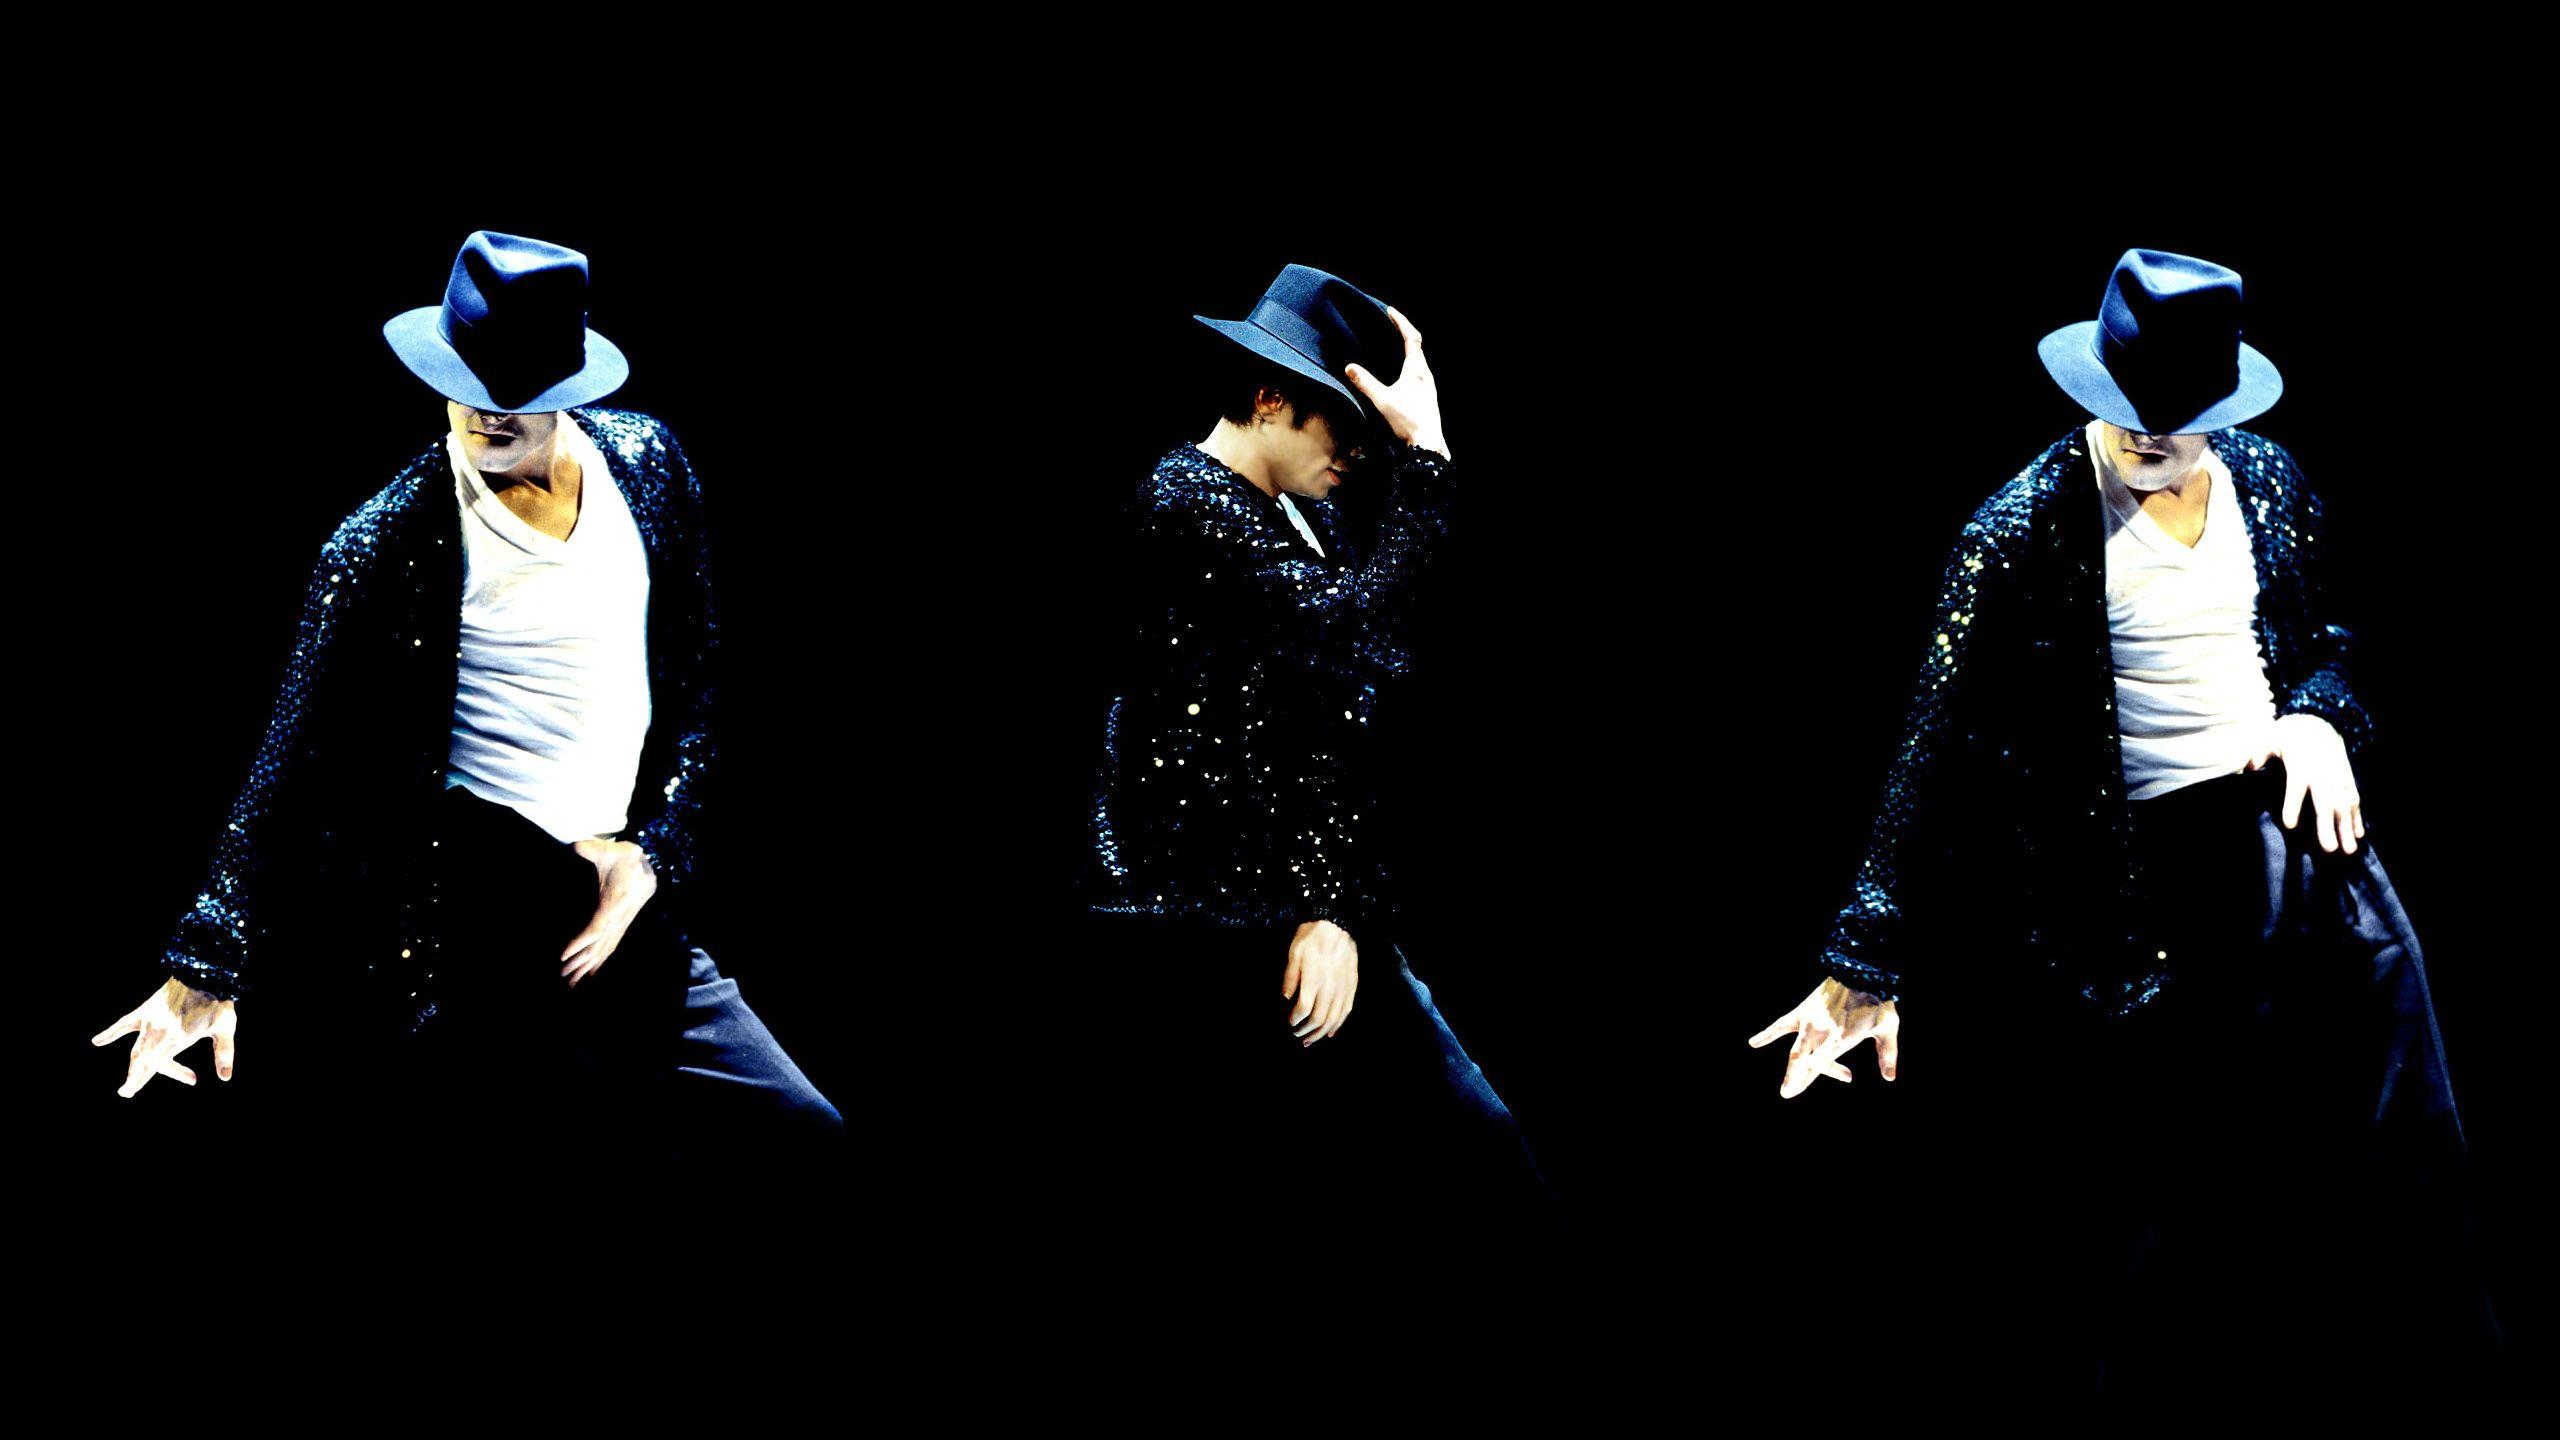 Michael Jackson Dance Wallpaper